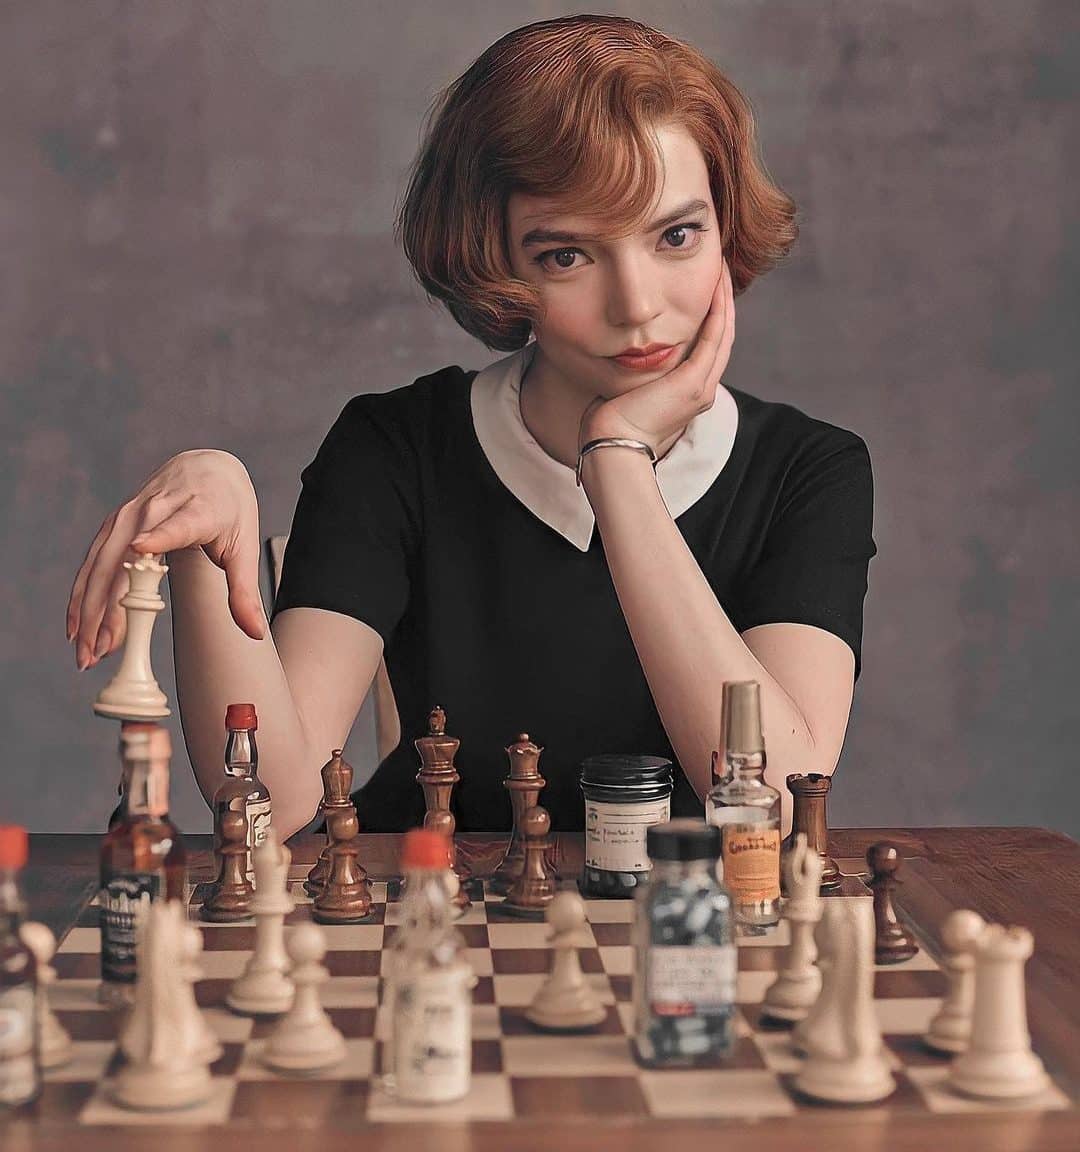 O Gambito da Rainha' inspira mulheres a ingressar no xadrez